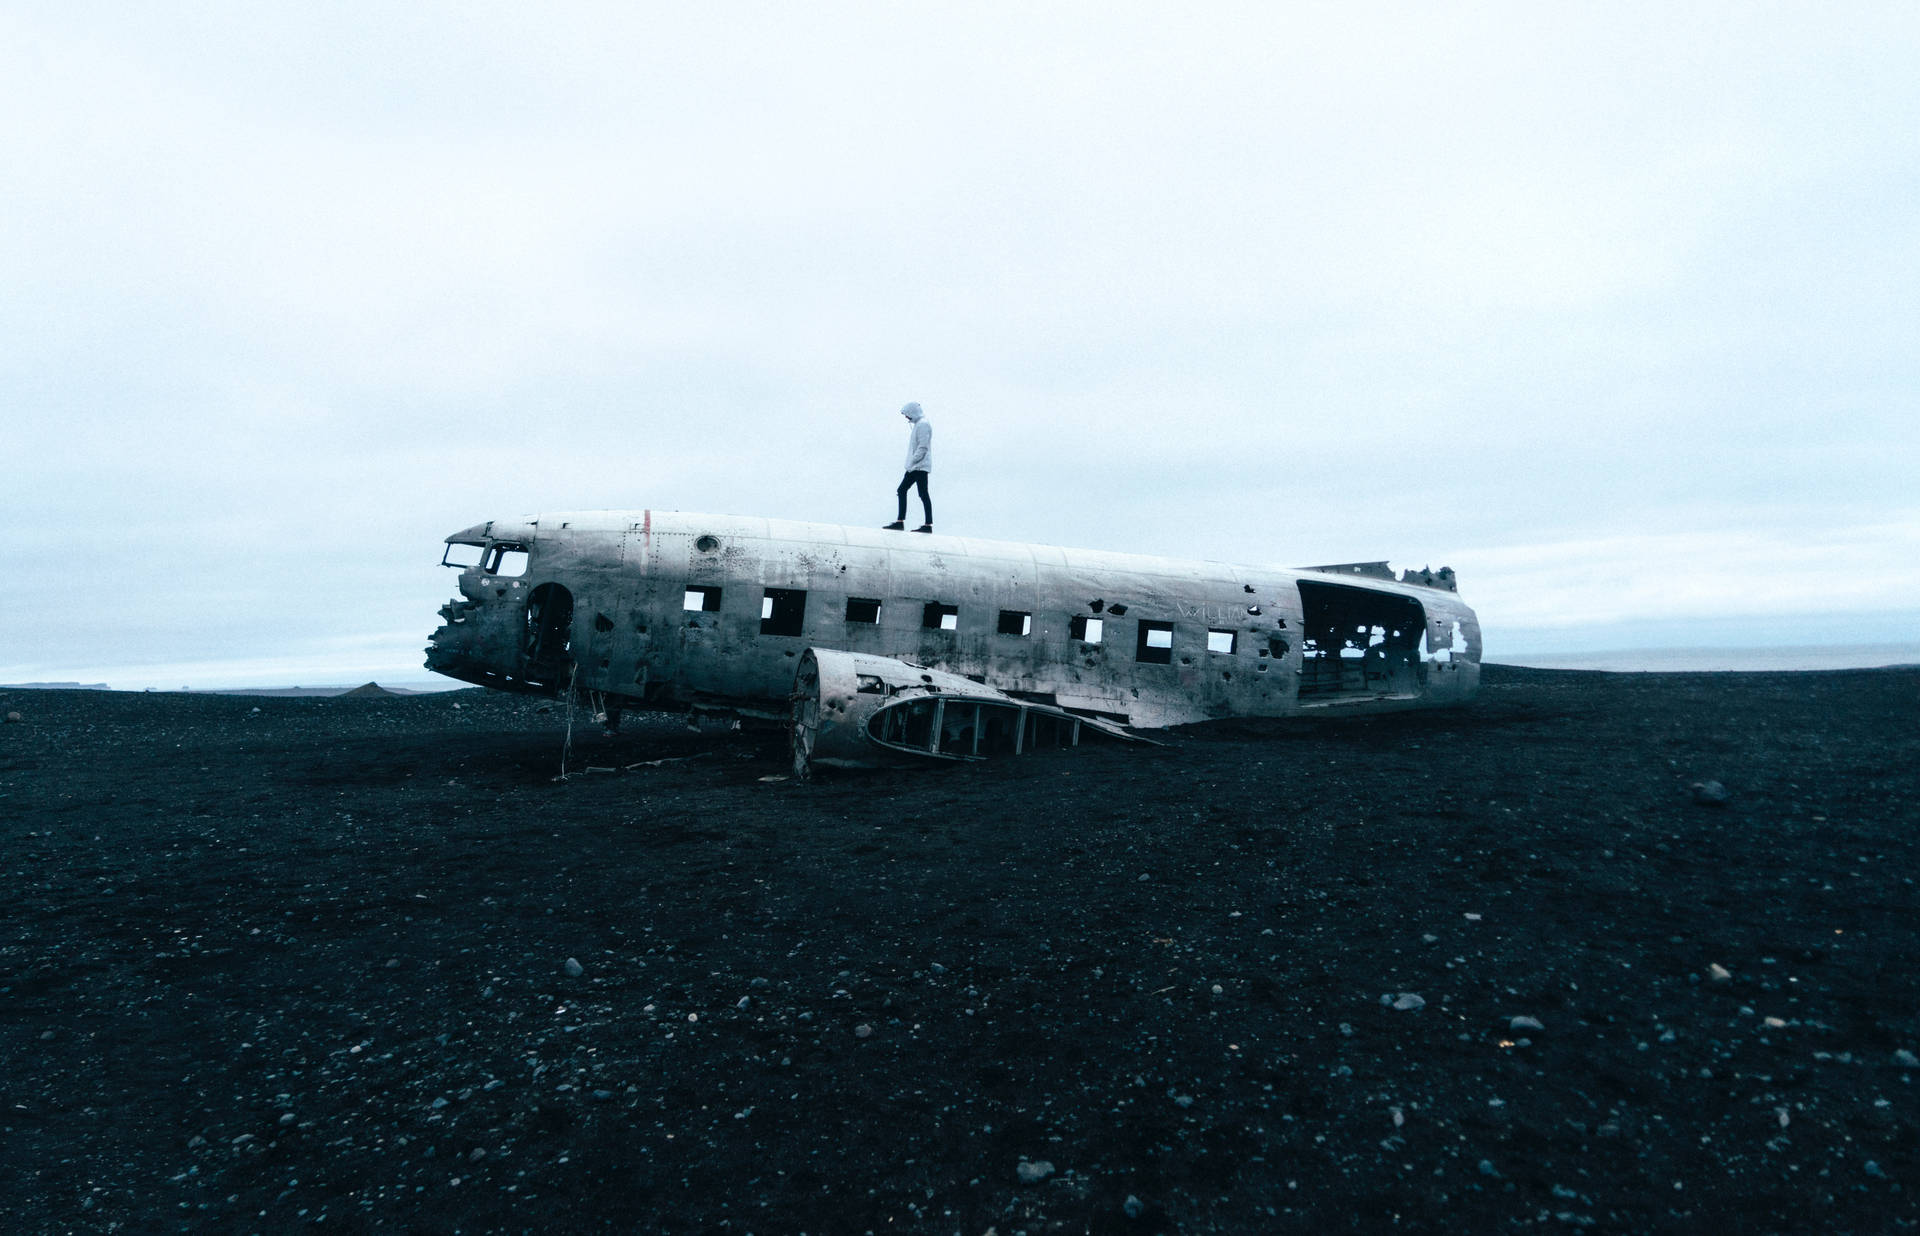 Wrecked Plane 4k Hd Wallpaper